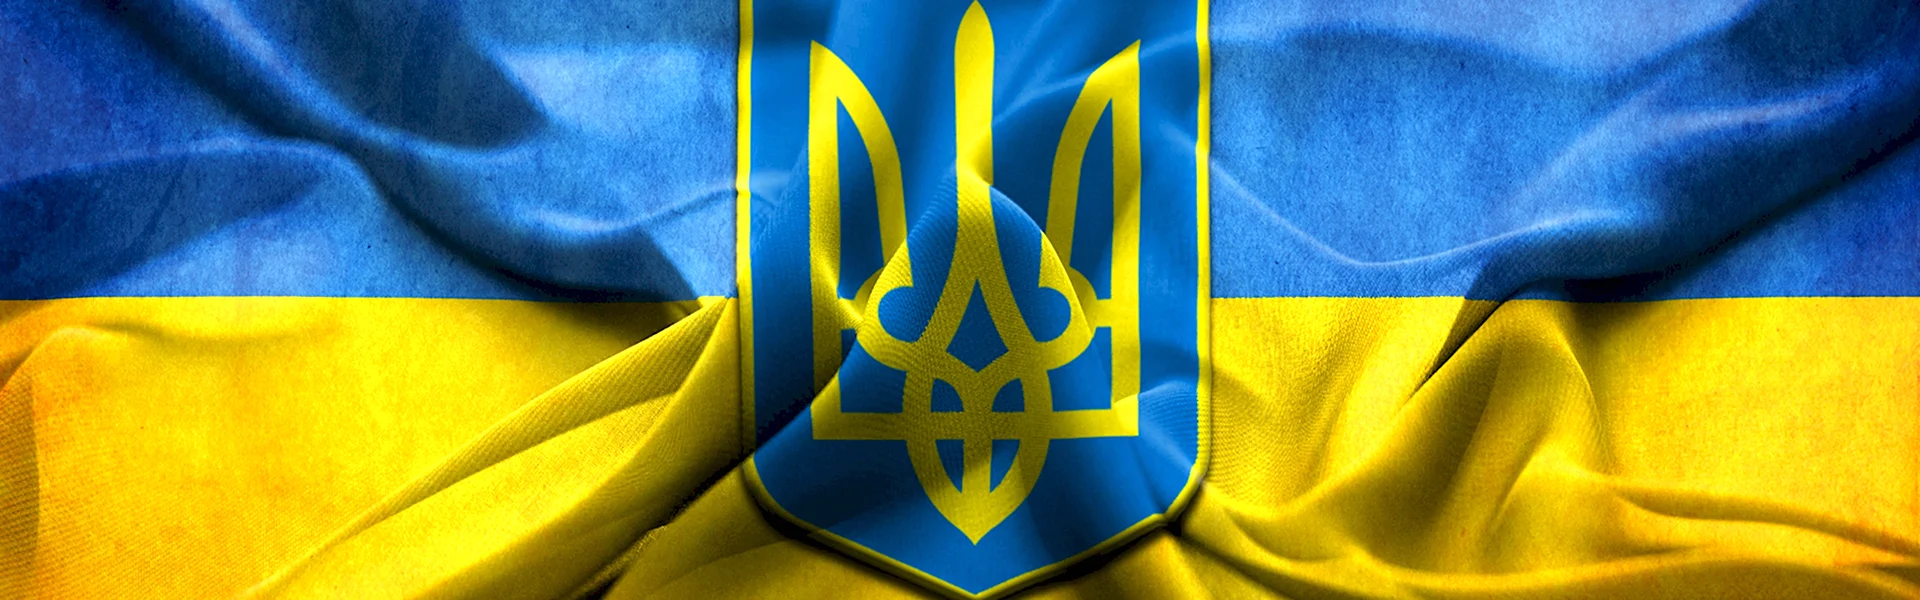 Флаг и герб Украины фото